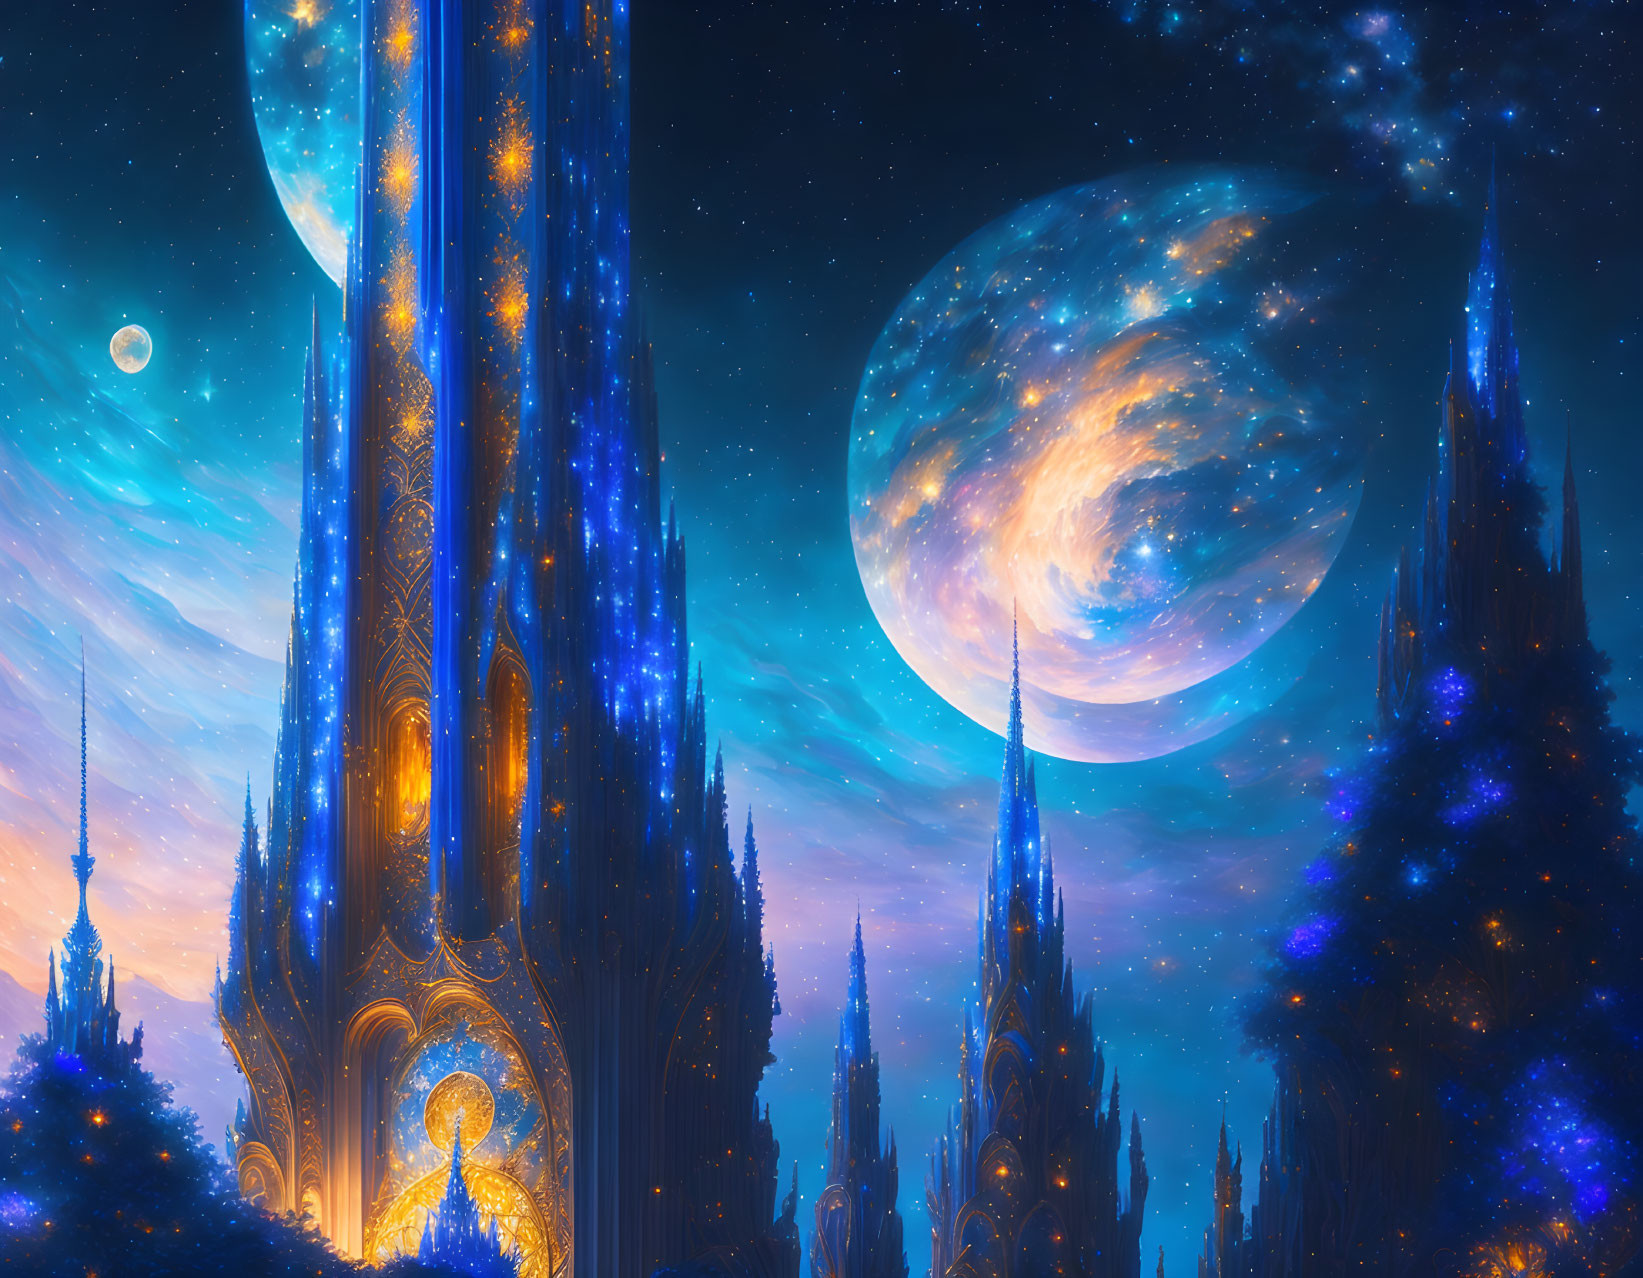 The moonlight castle